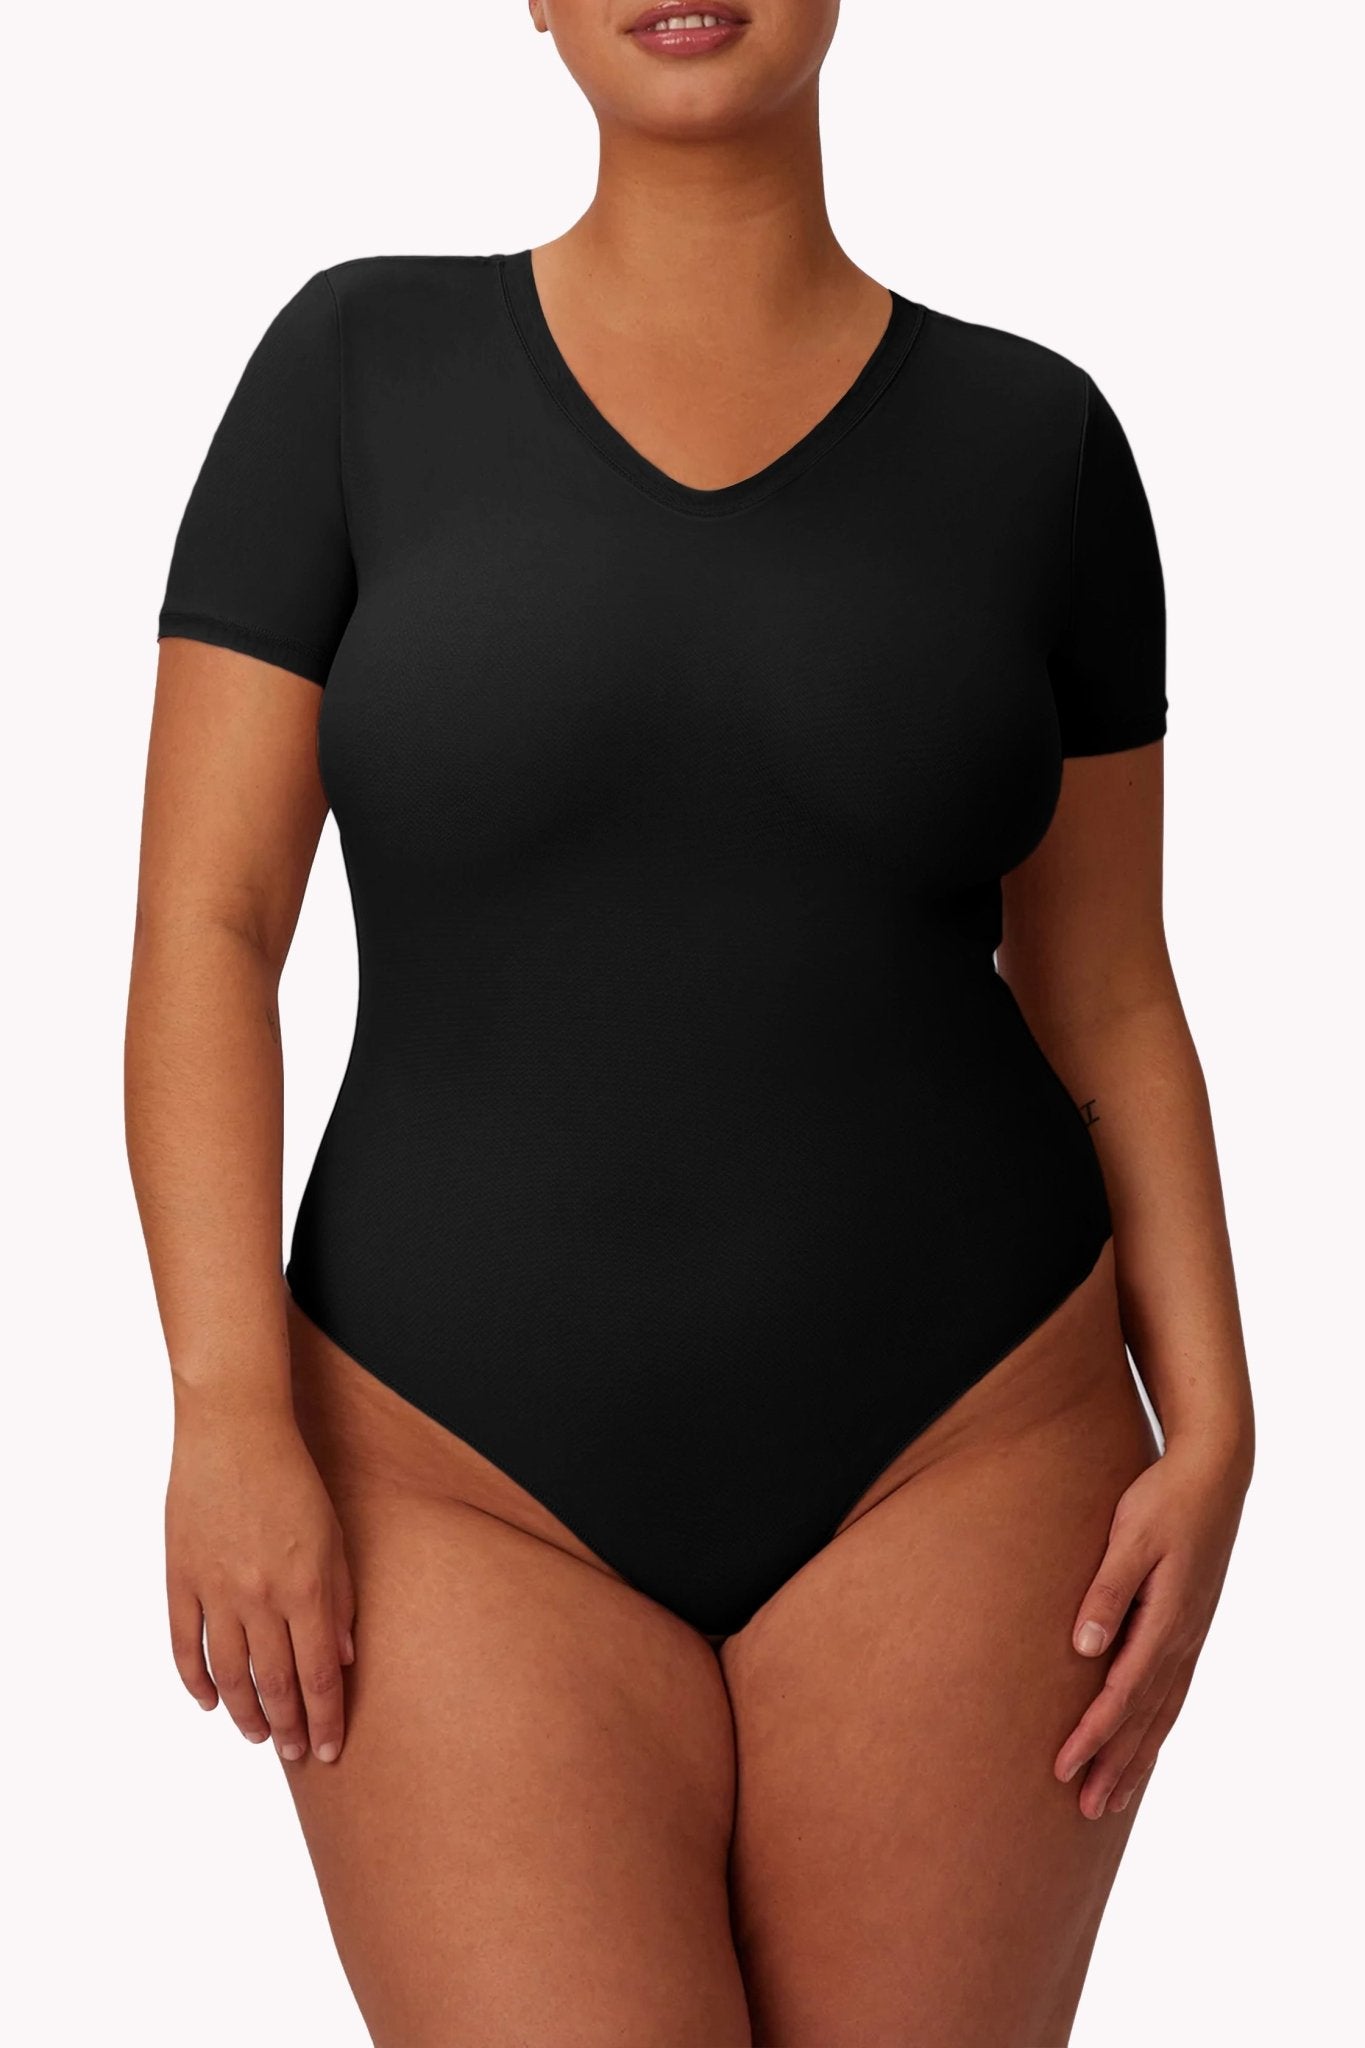 POSESHE Women's Plus Size Square Neck Short Sleeve Bodysuit, 3X, BLACK